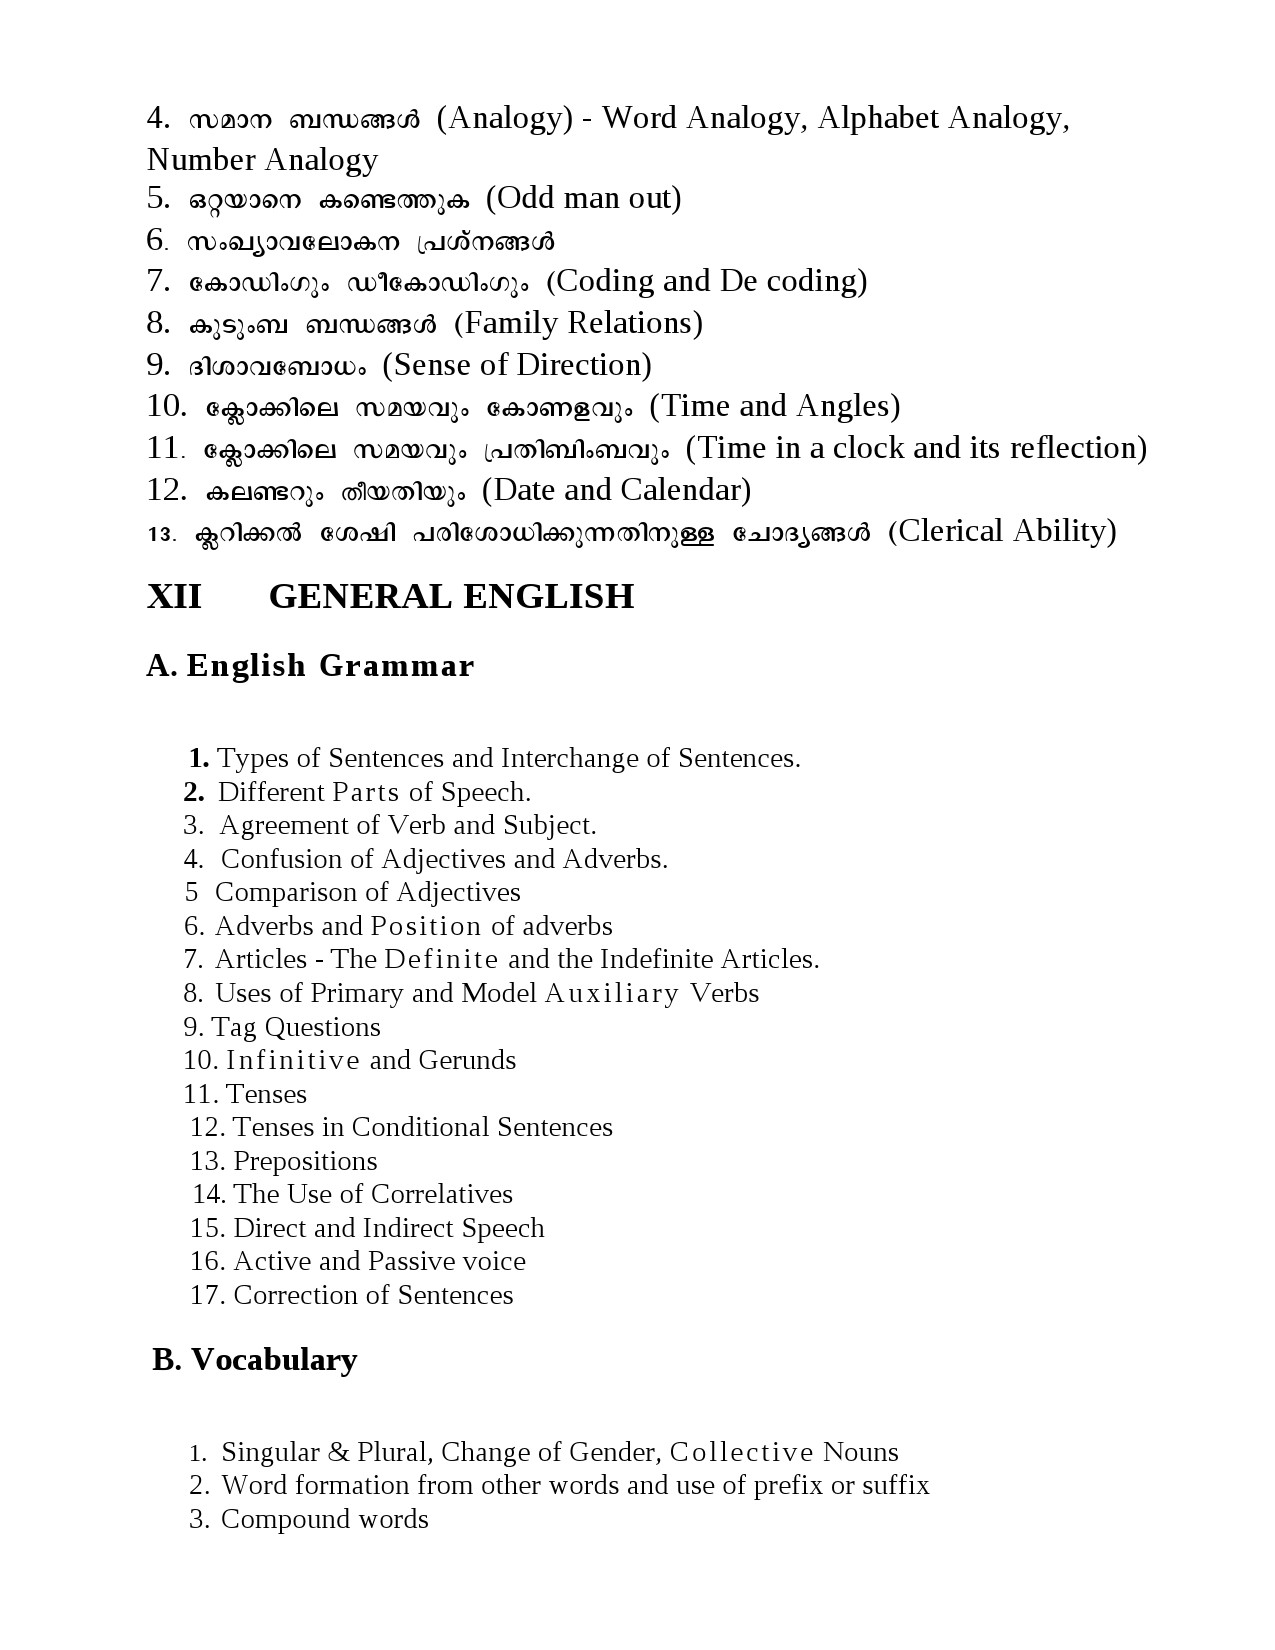 Plus Two Level Preliminary Examination KPSC Exam Syllabus May 202 - Notification Image 8